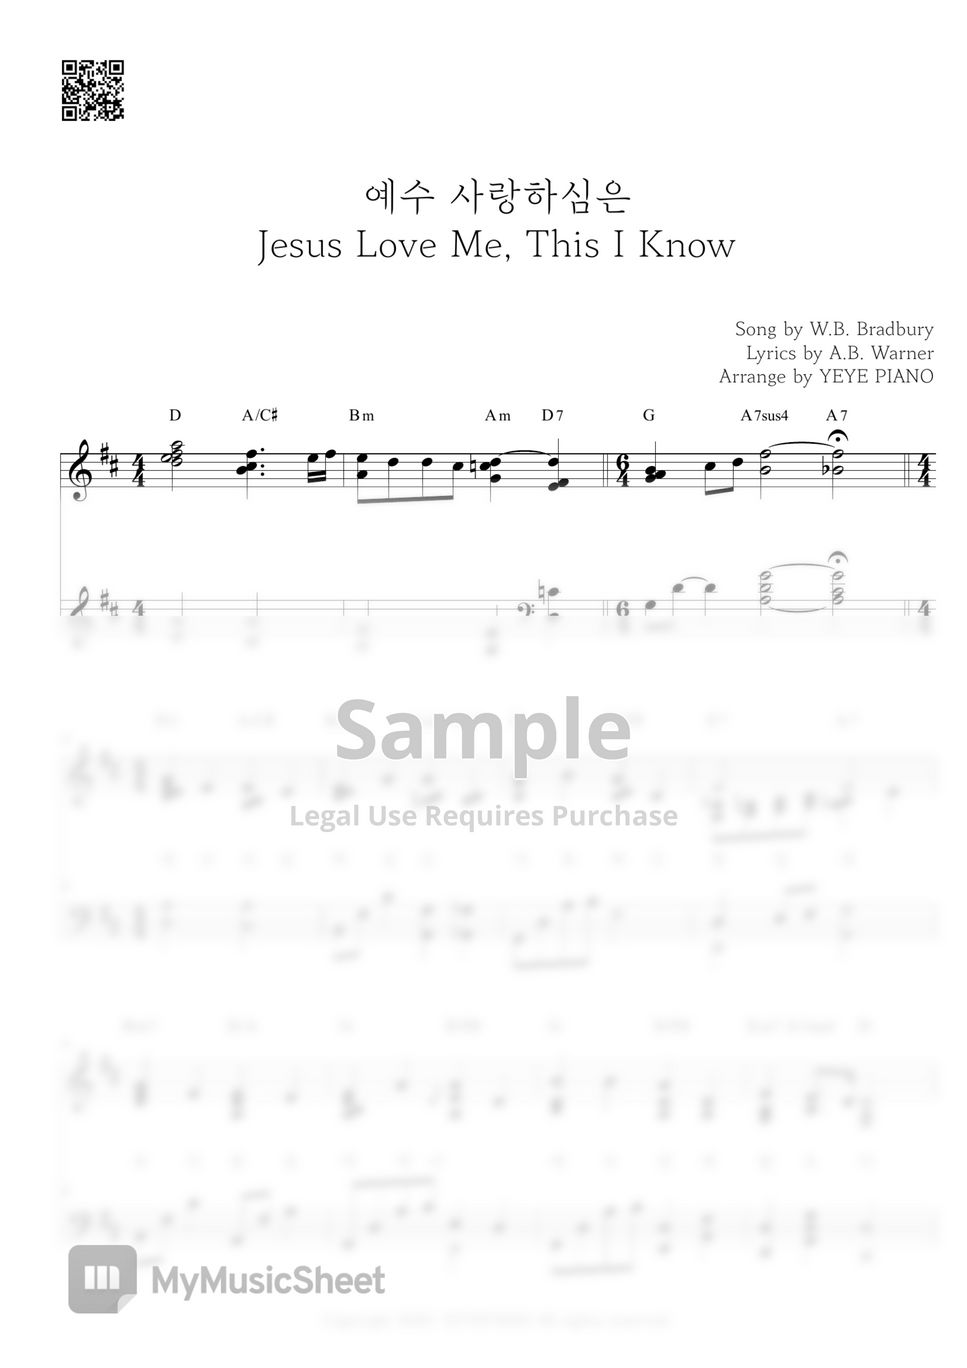 W.B. Bradbury - Jesus Love Me, This I Know by YEYE PIANO